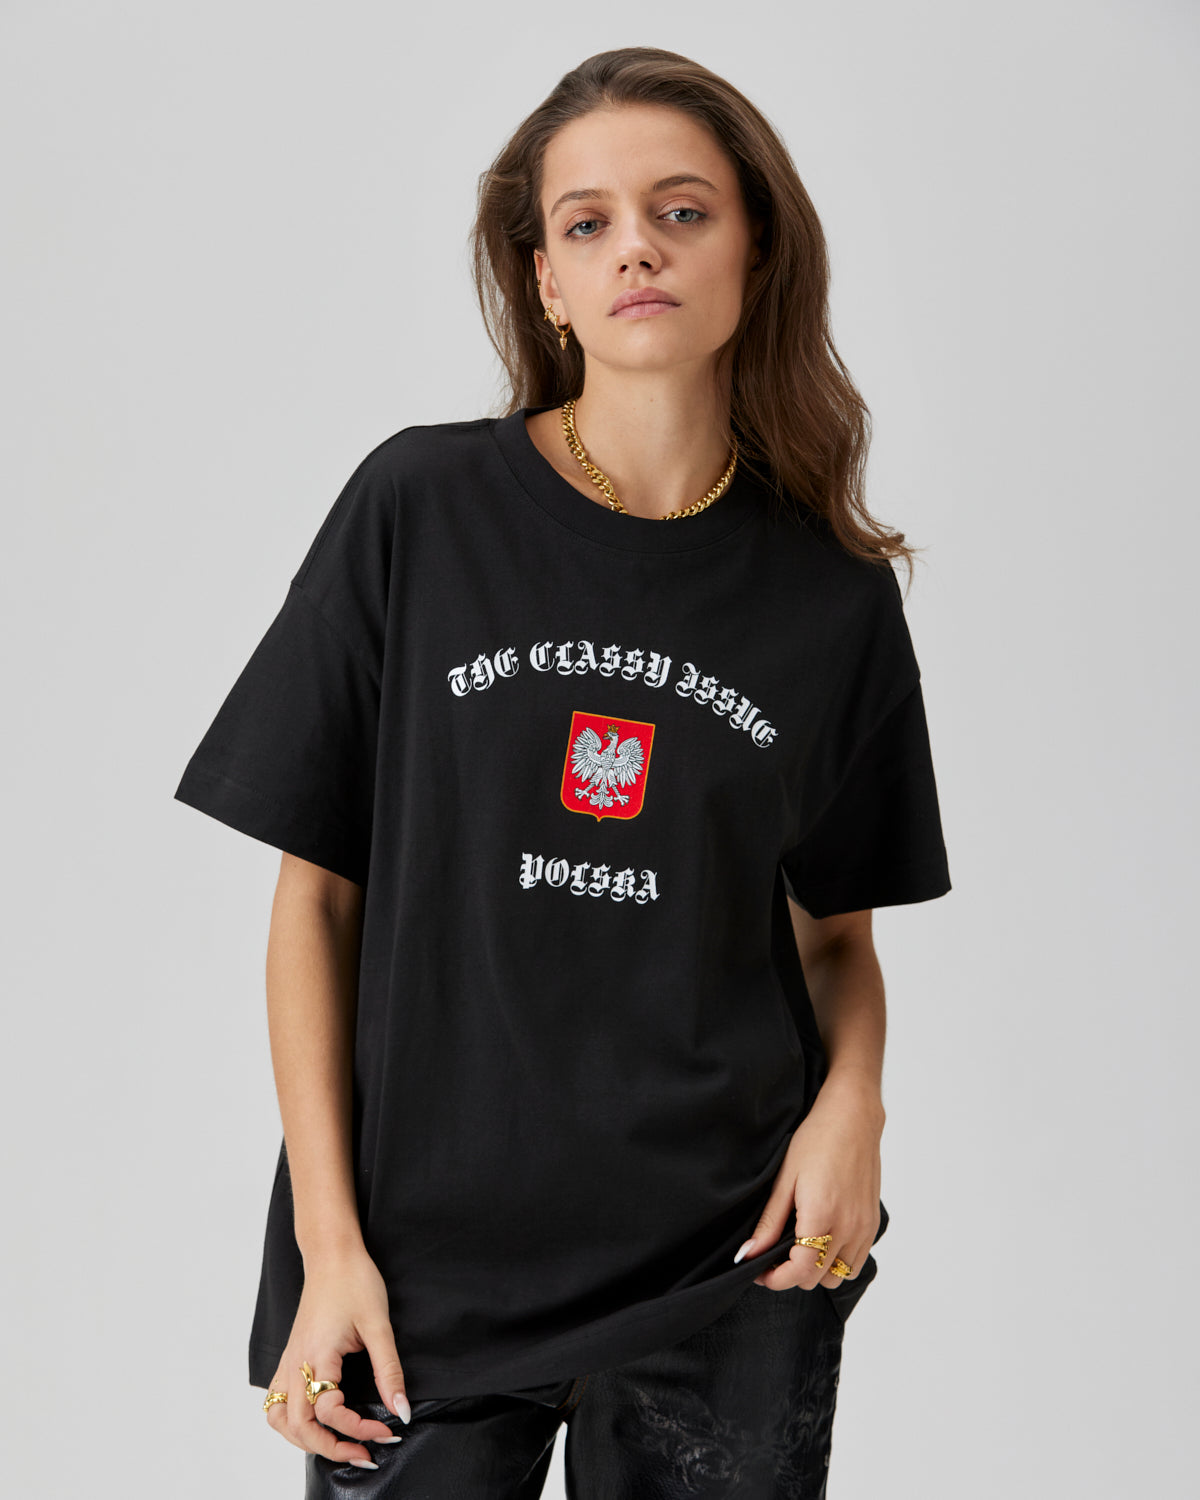 Polska T-shirt